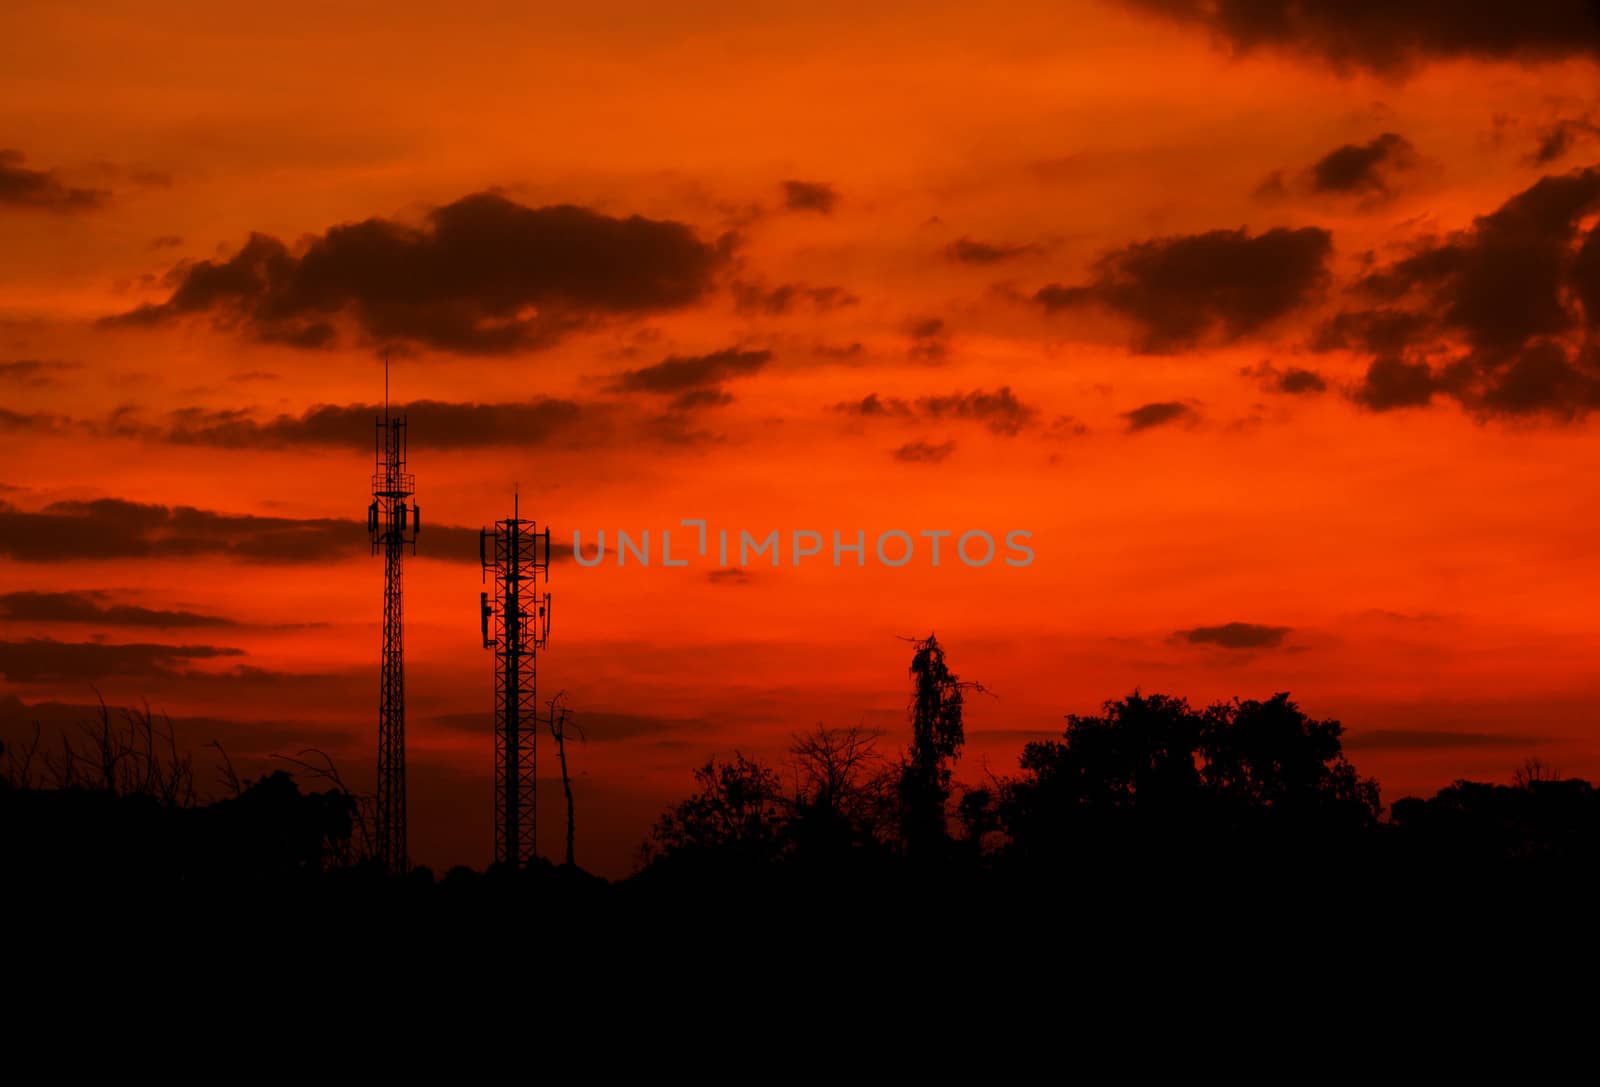 telephone poles on sunset with orange sky